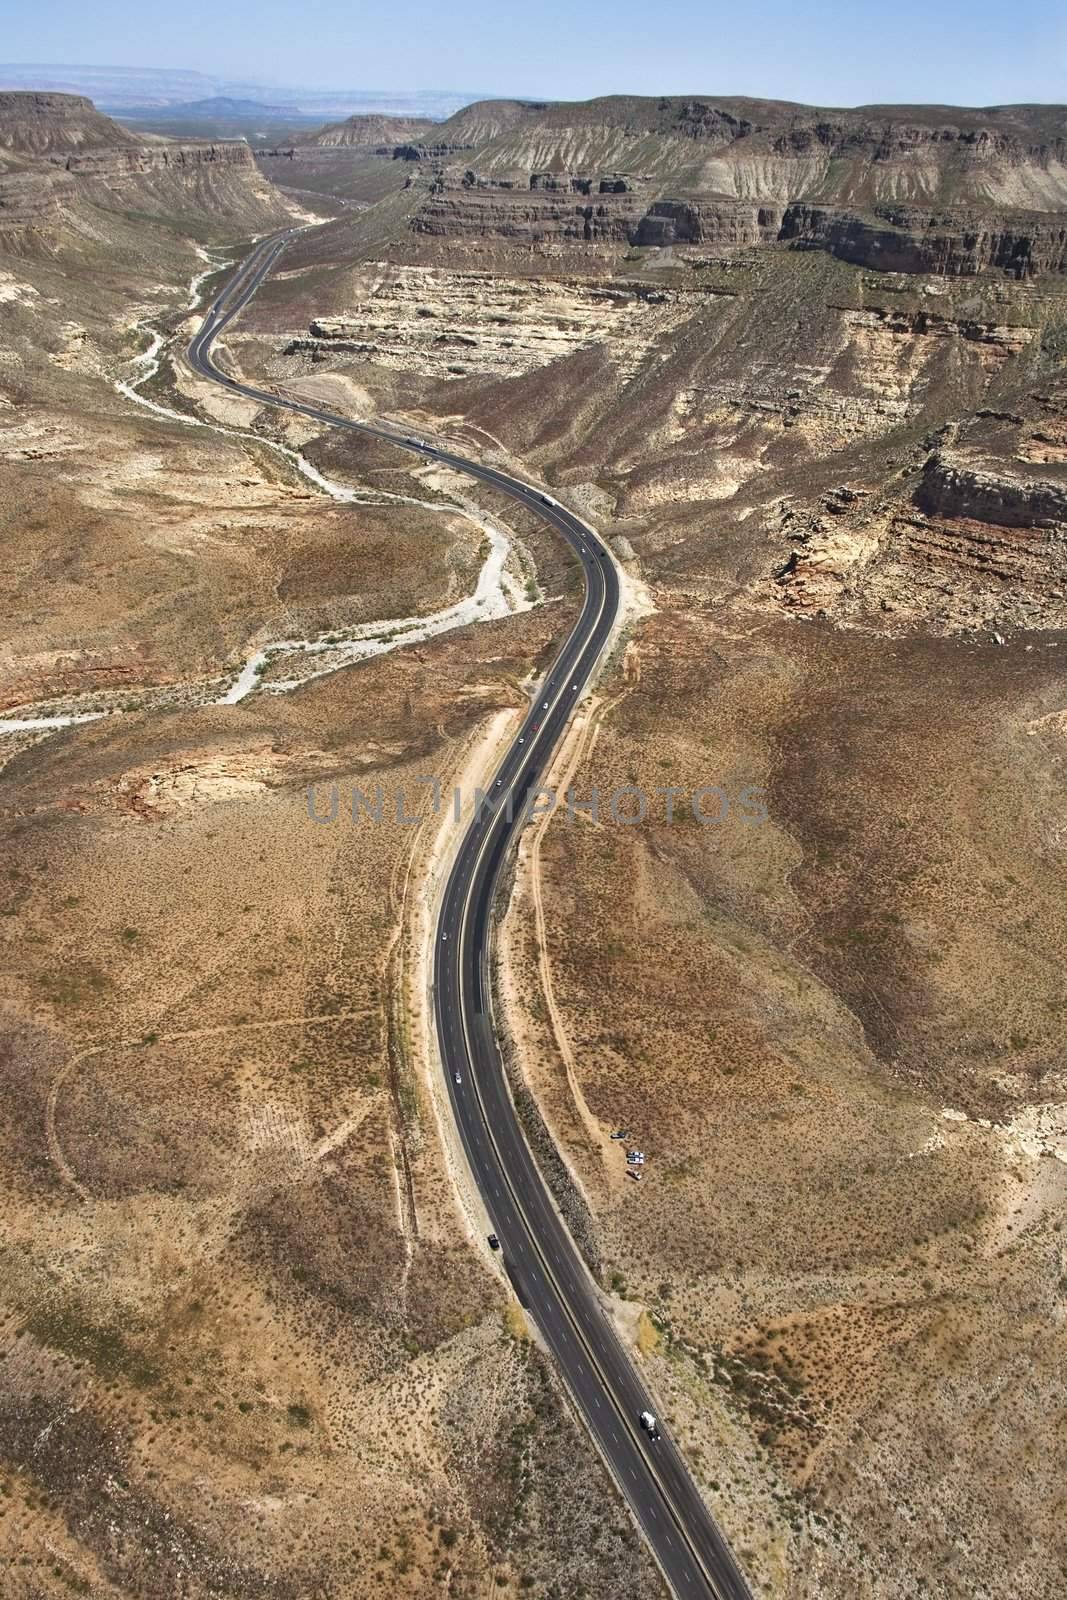 Aerial of scenic highway Interstate 15 through desert landscape of Arizona, USA.